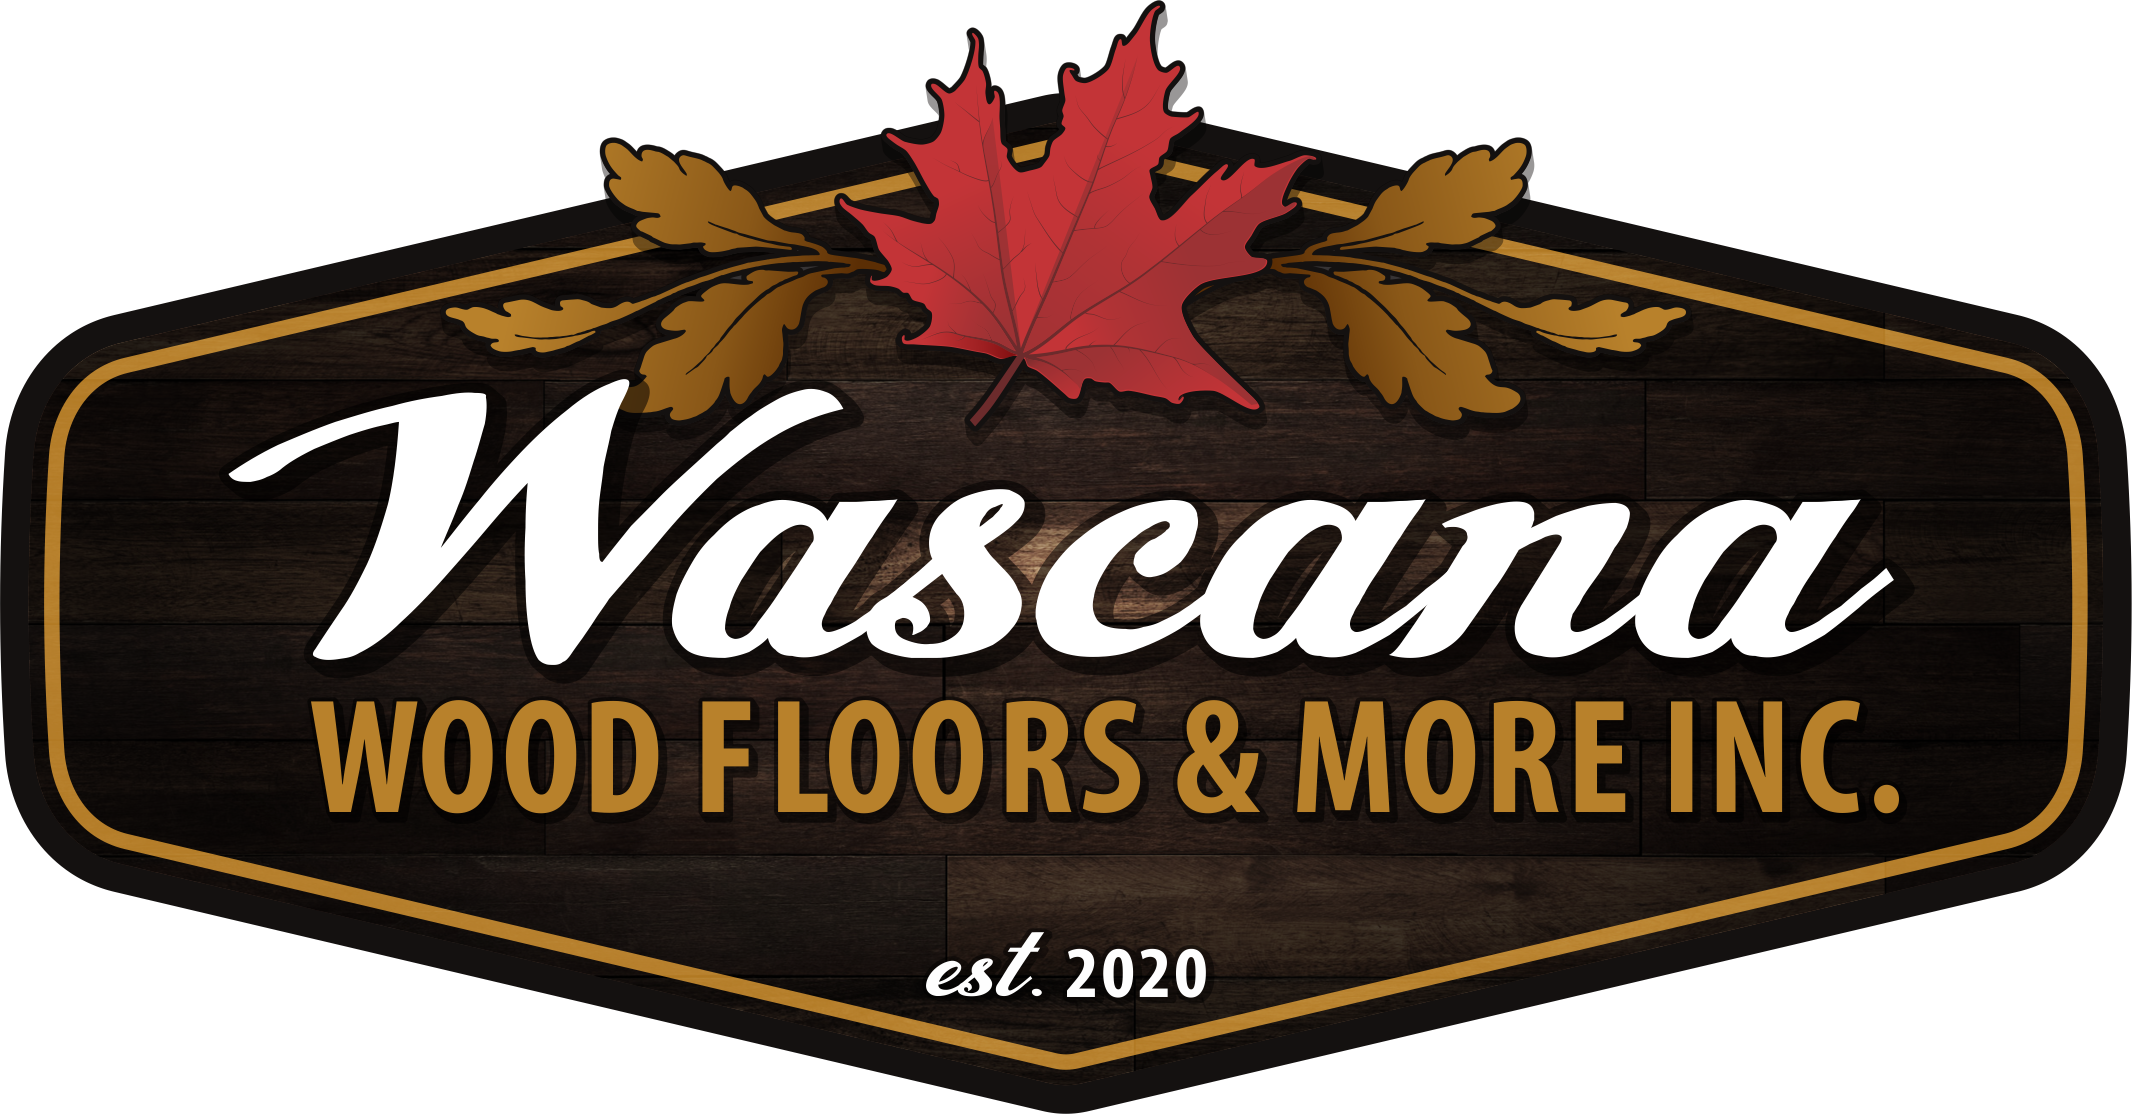 Wascana Wood Floors & More Inc.